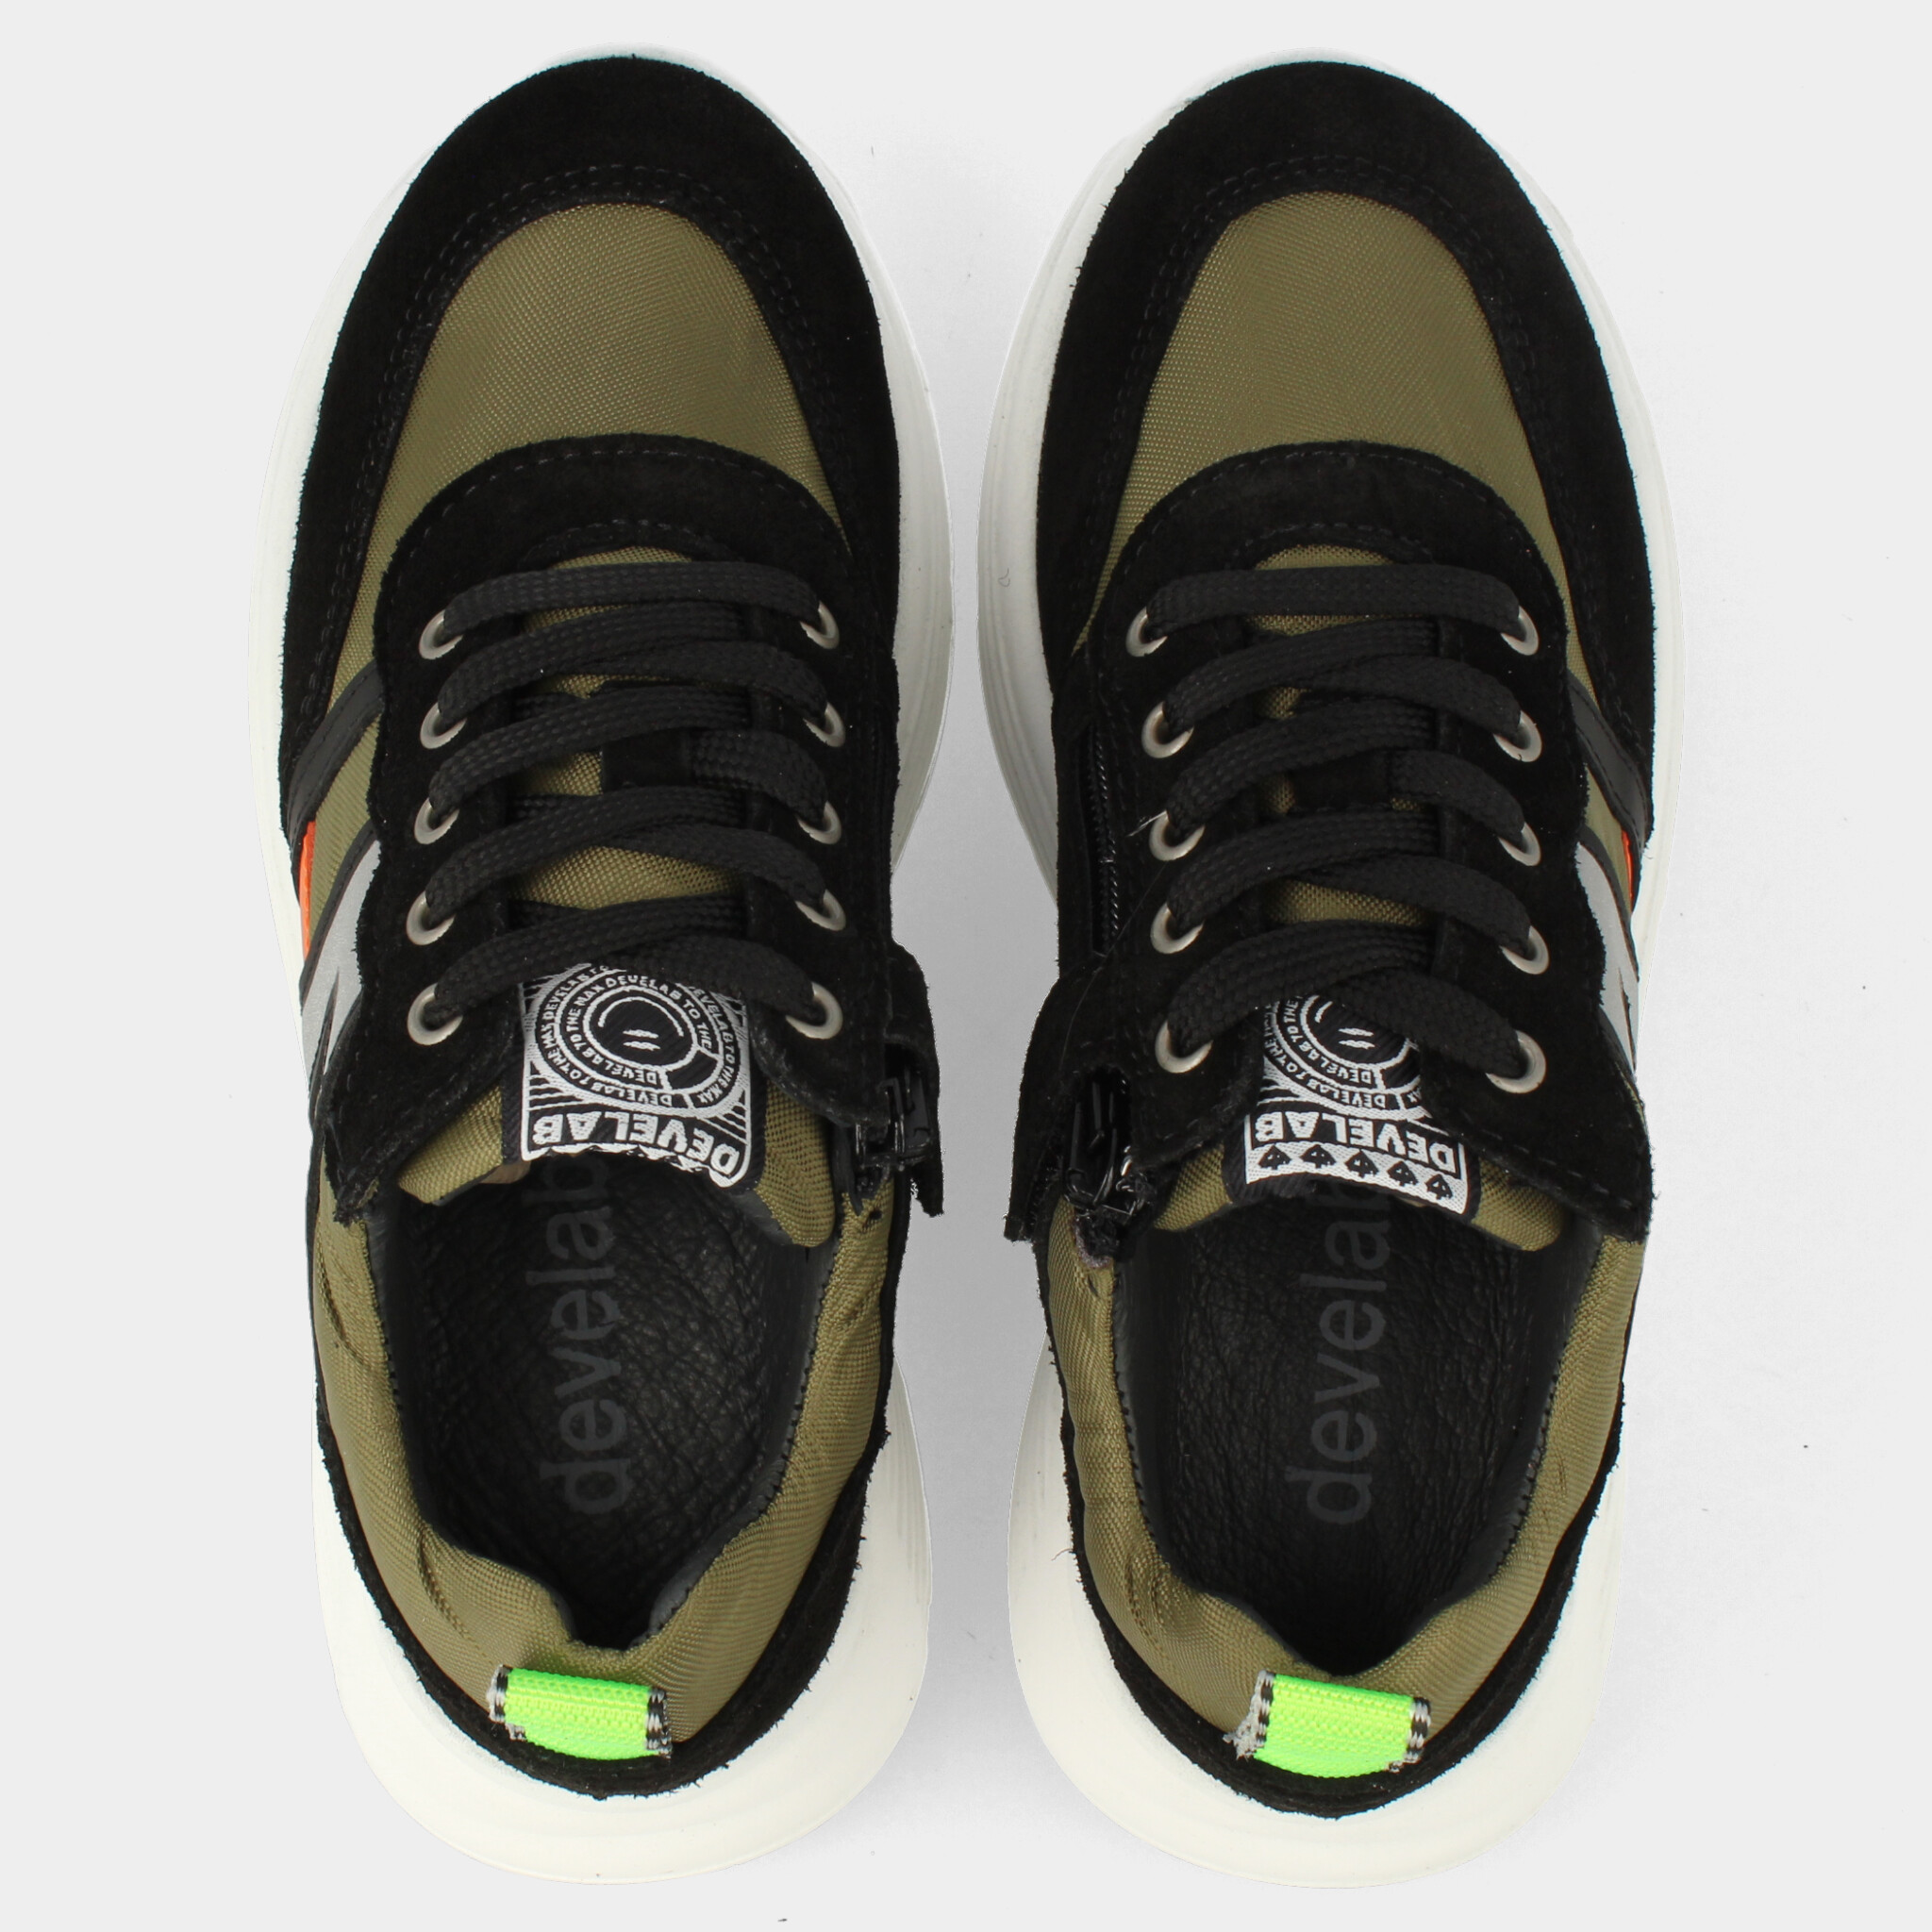 Groene sneakers | 45923